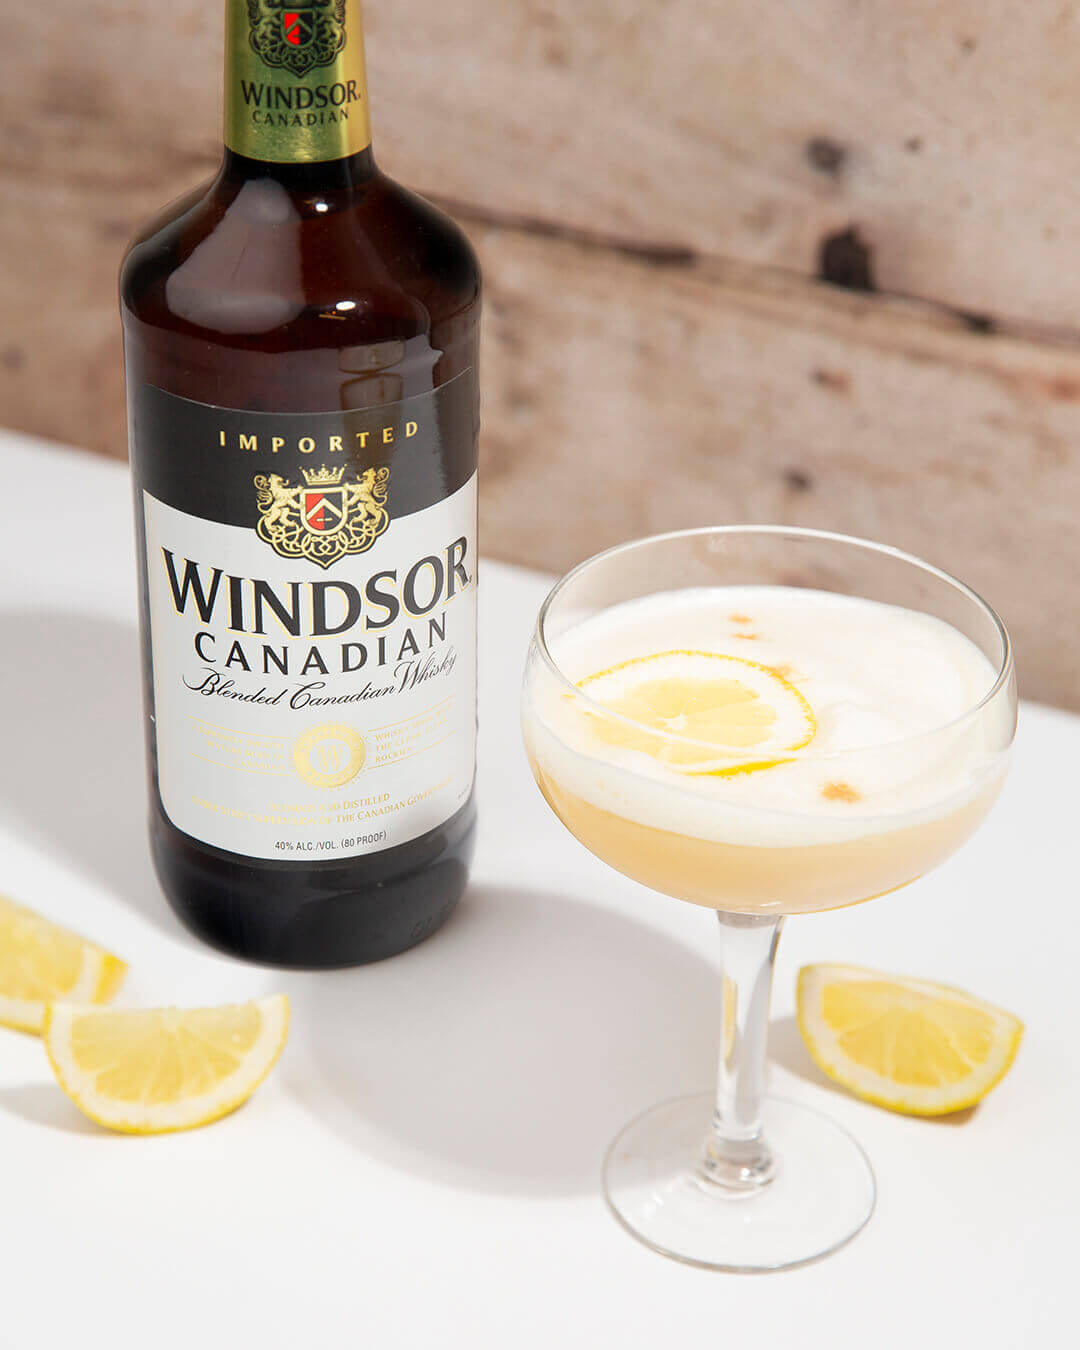 Windsor Canadian Sour garnished with lemon and a bottle of Windsor Canadian Bottle on the side